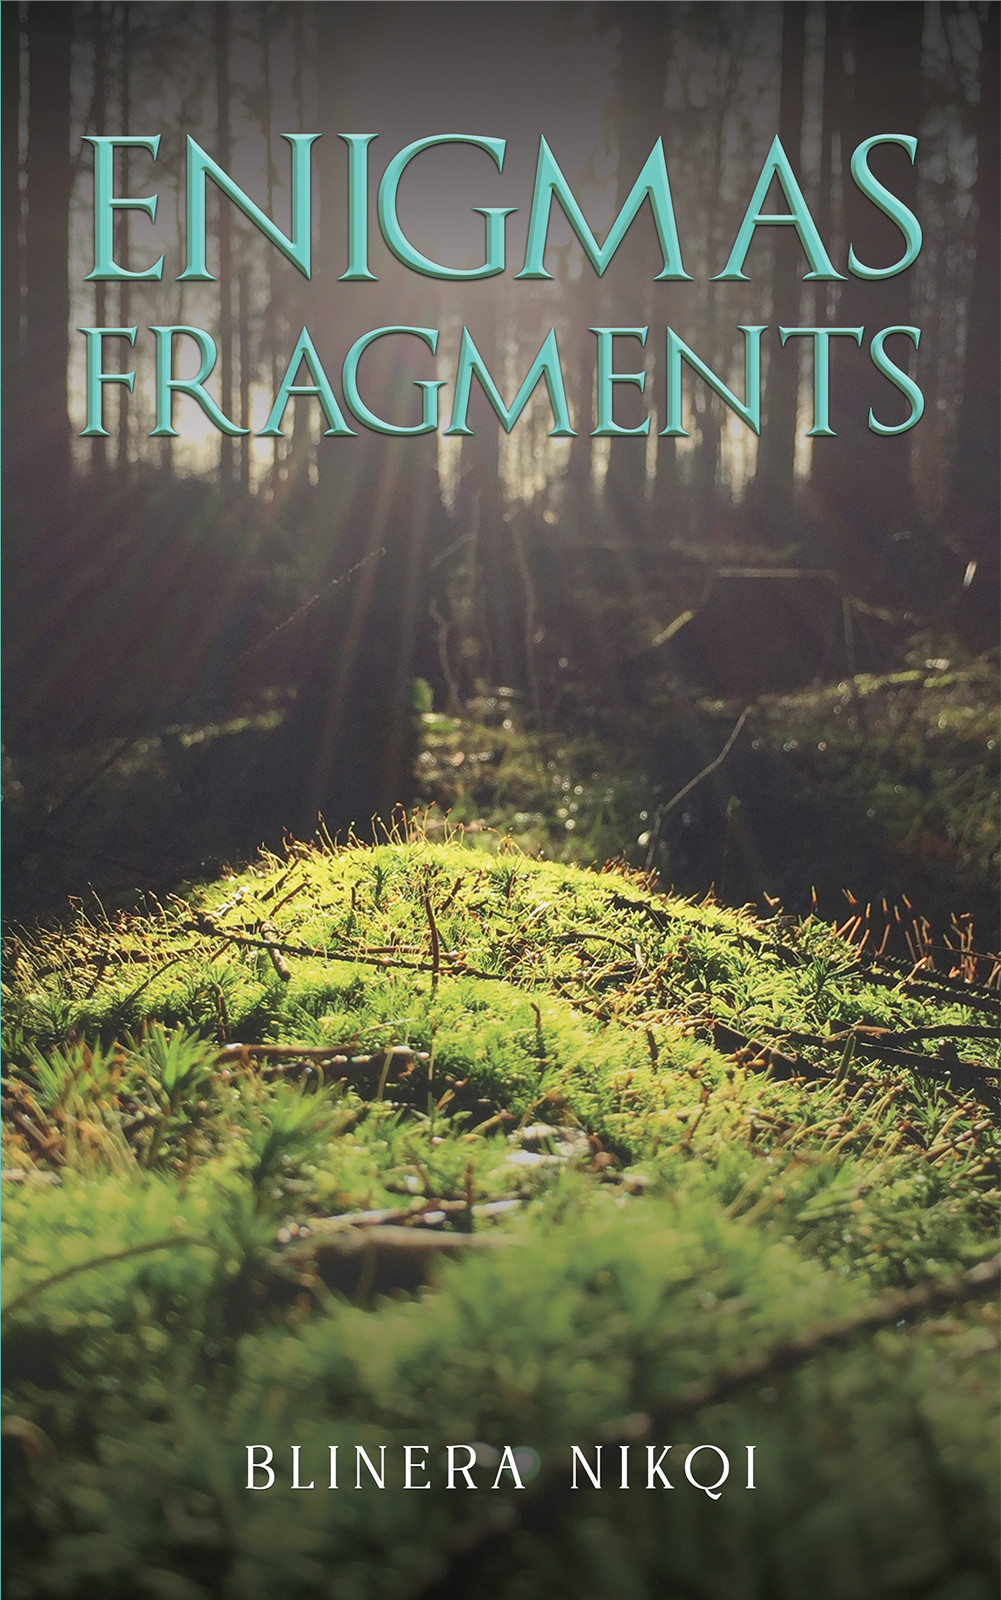 Enigmas Fragments